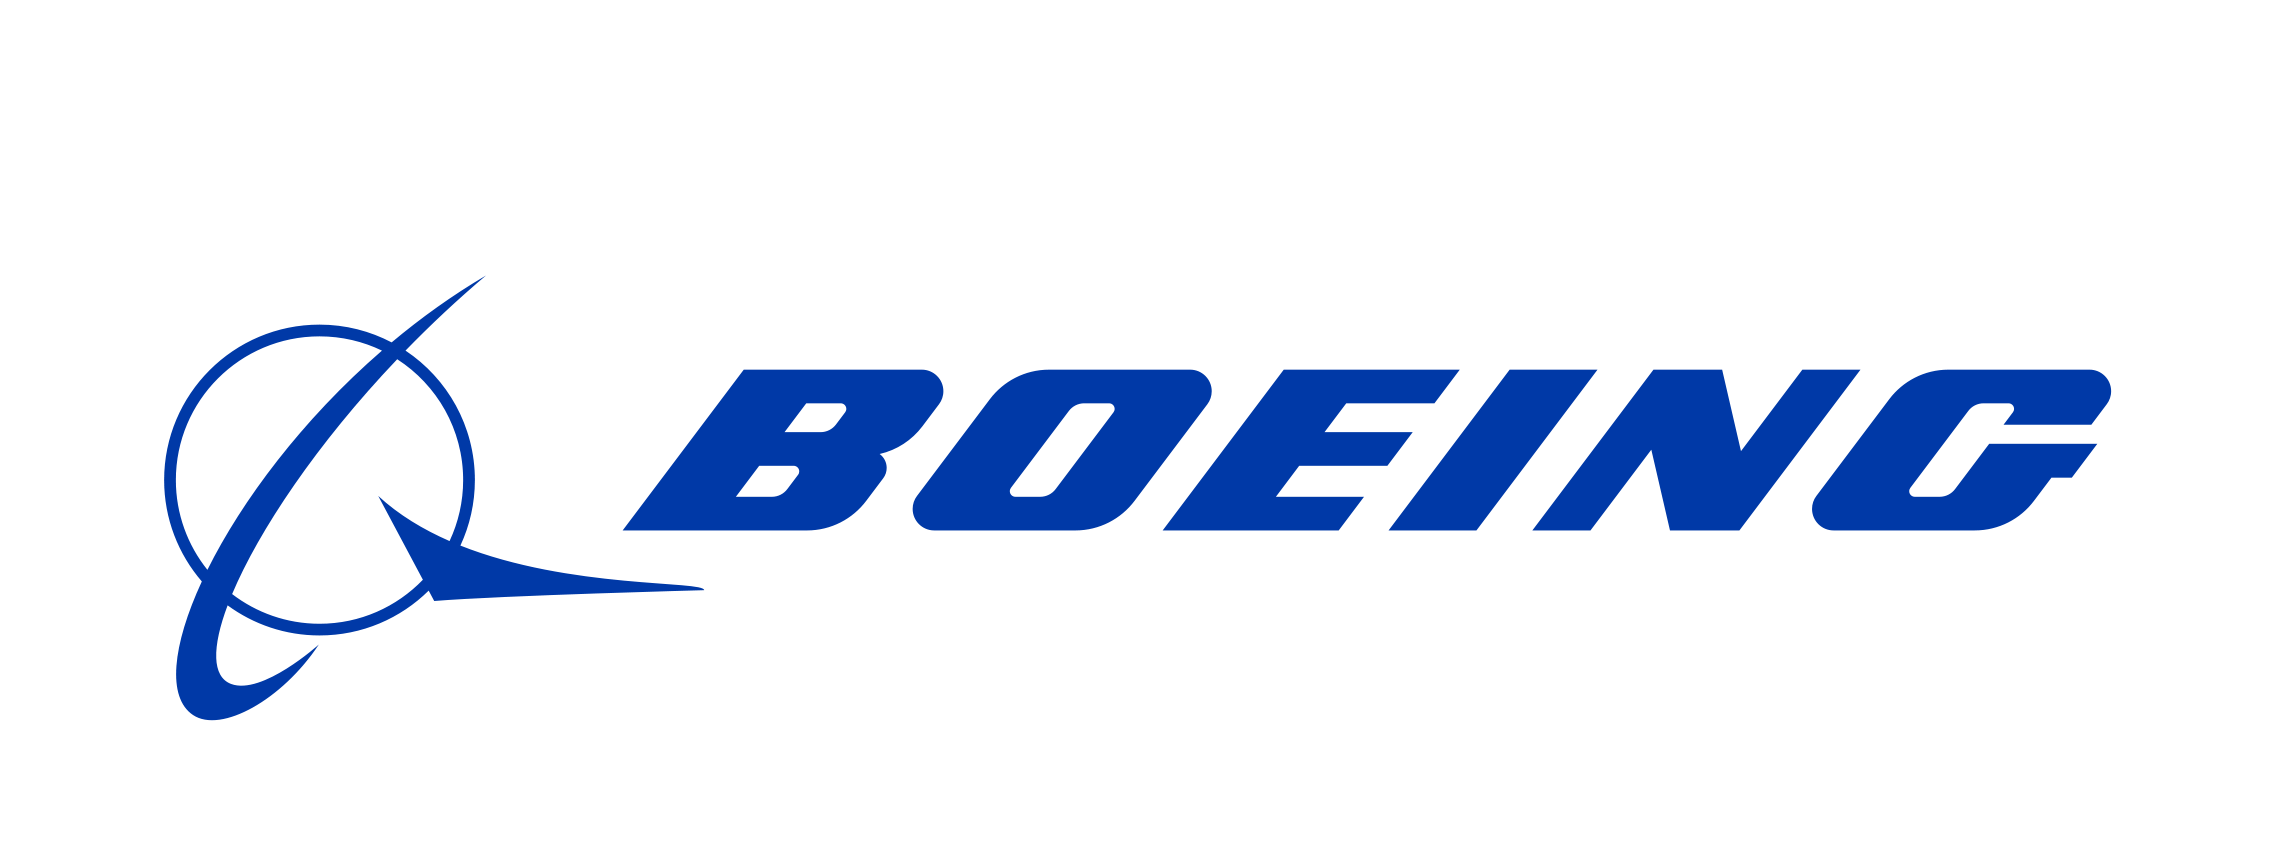 Winnipeg Logo - Boeing: Boeing Canada - Winnipeg